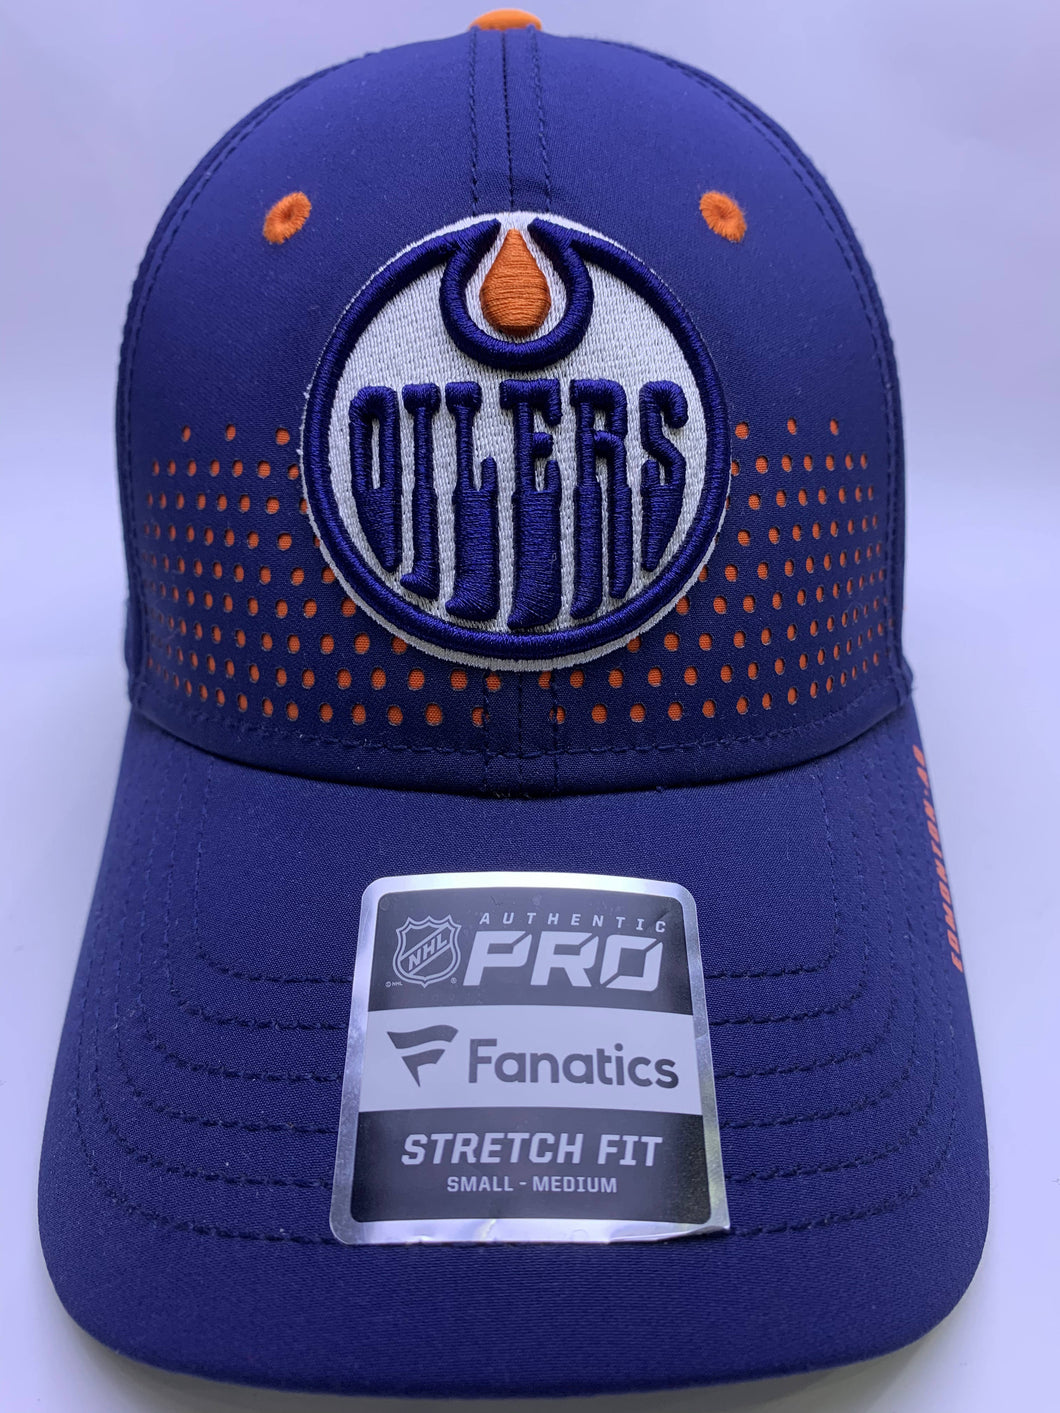 Fanatics Edmonton Oilers Flex Cap Small/Medium